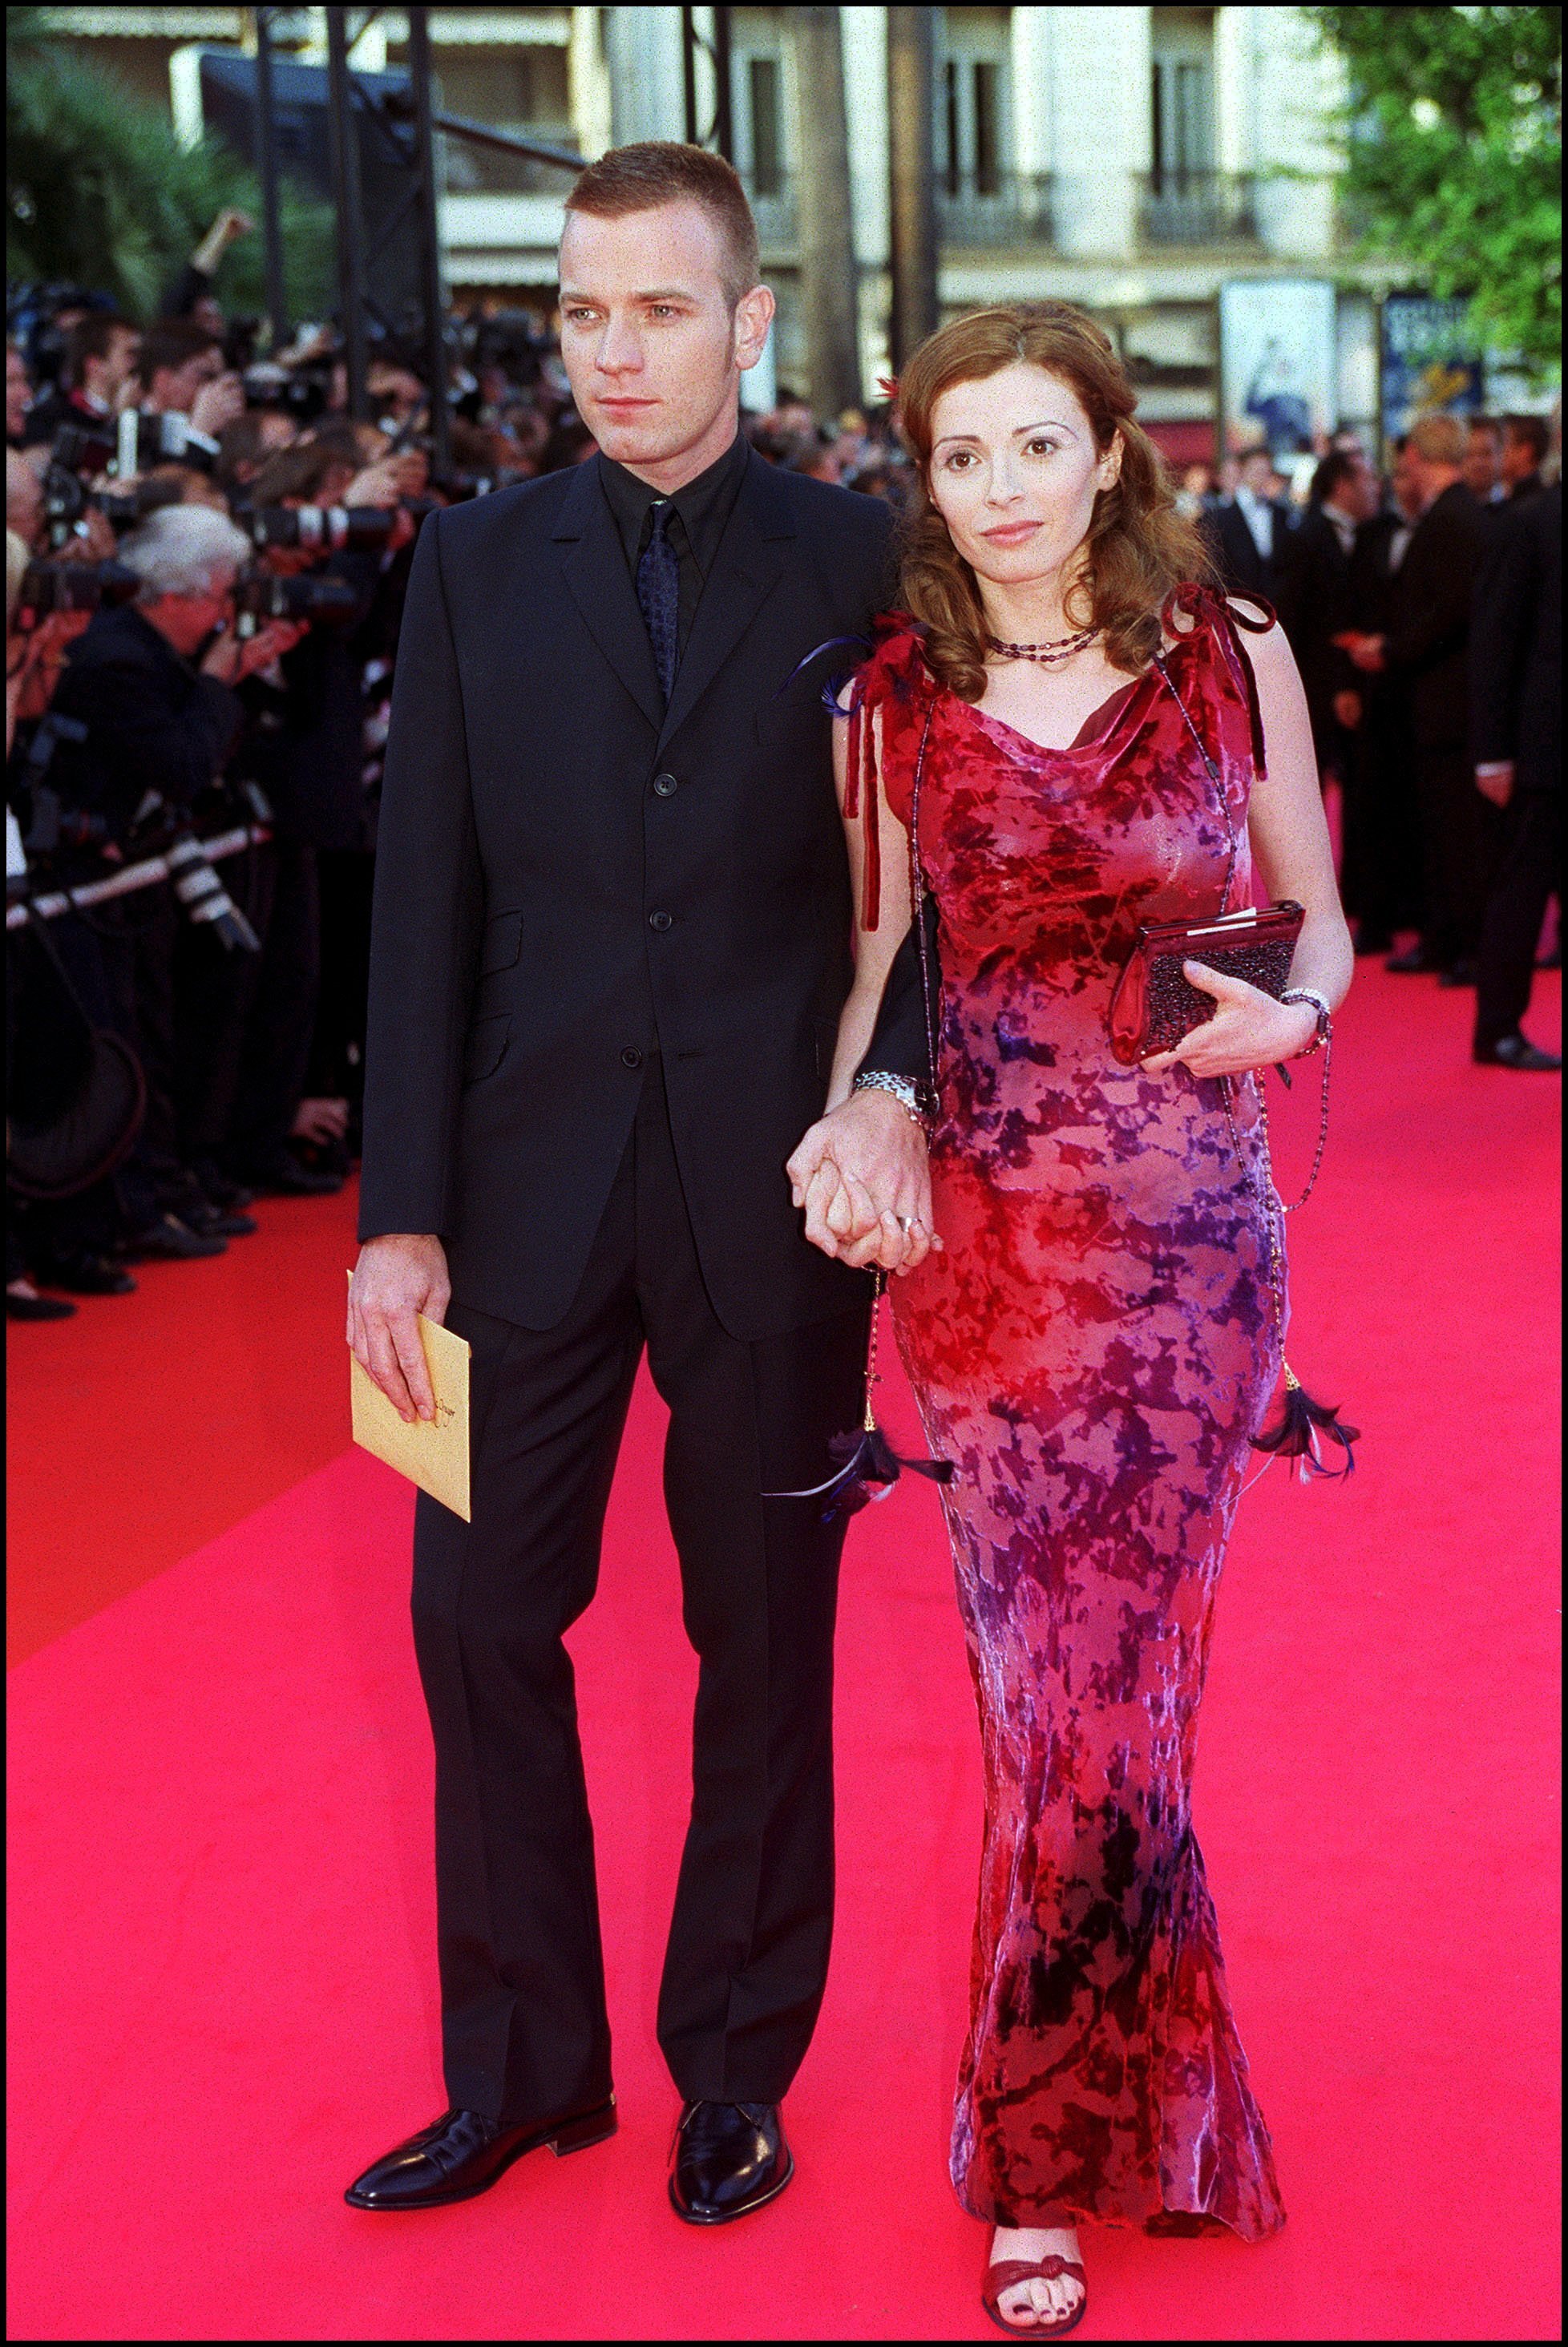 2001-05-09-54th-Cannes-Film-Festival-Moulin-Rouge-Premiere-009.jpg